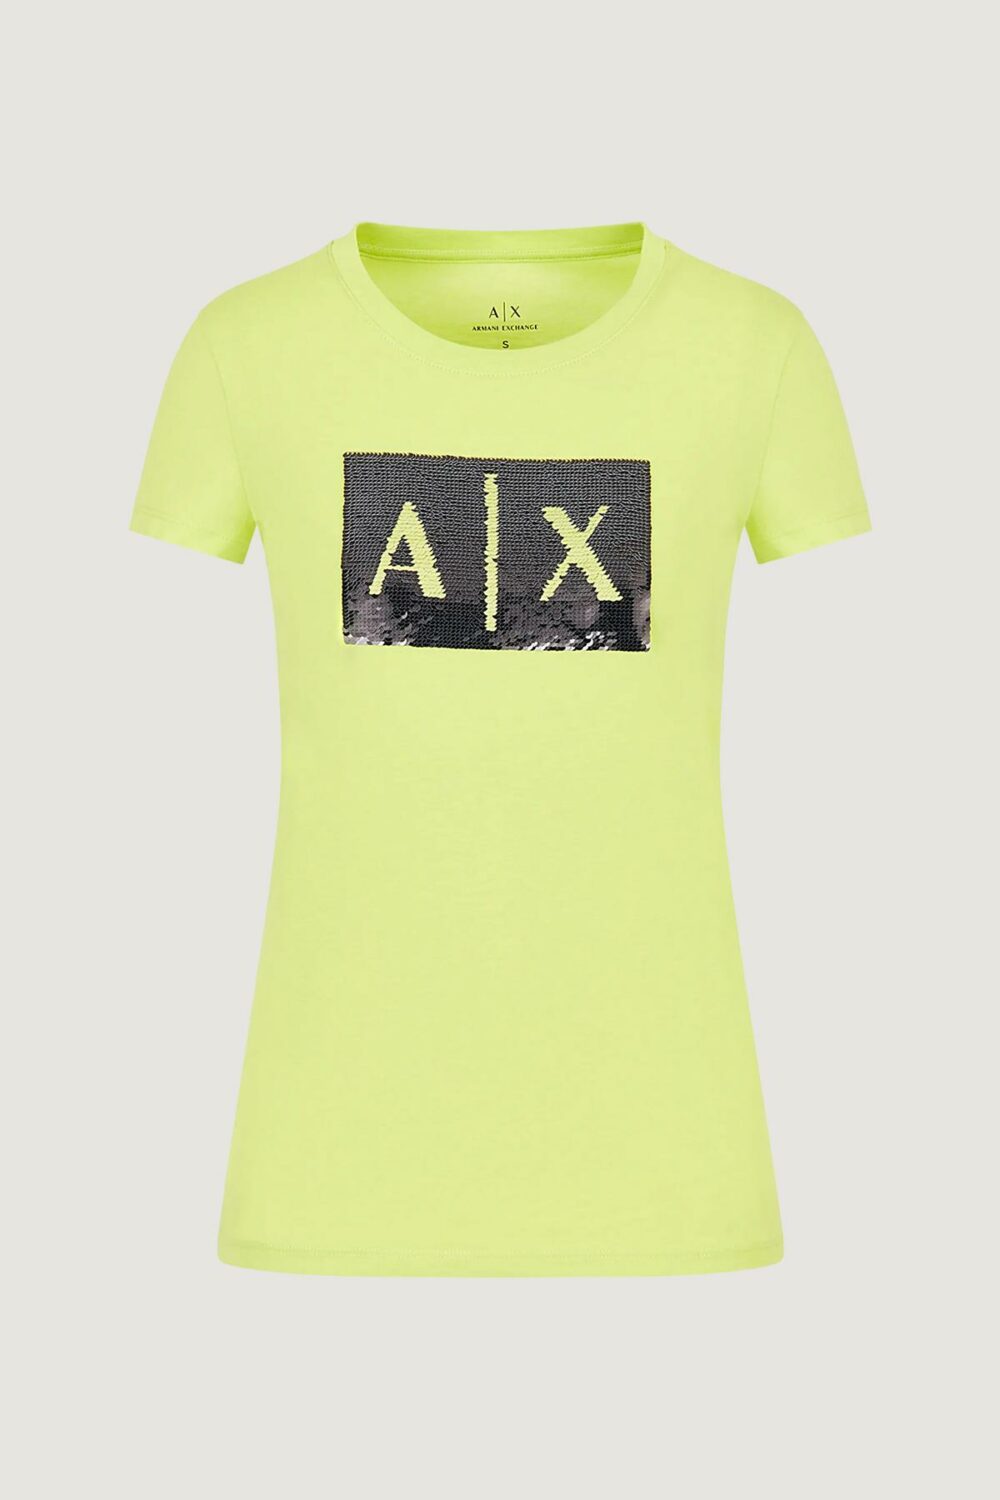 T-shirt Armani Exchange  Giallo lime - Foto 2